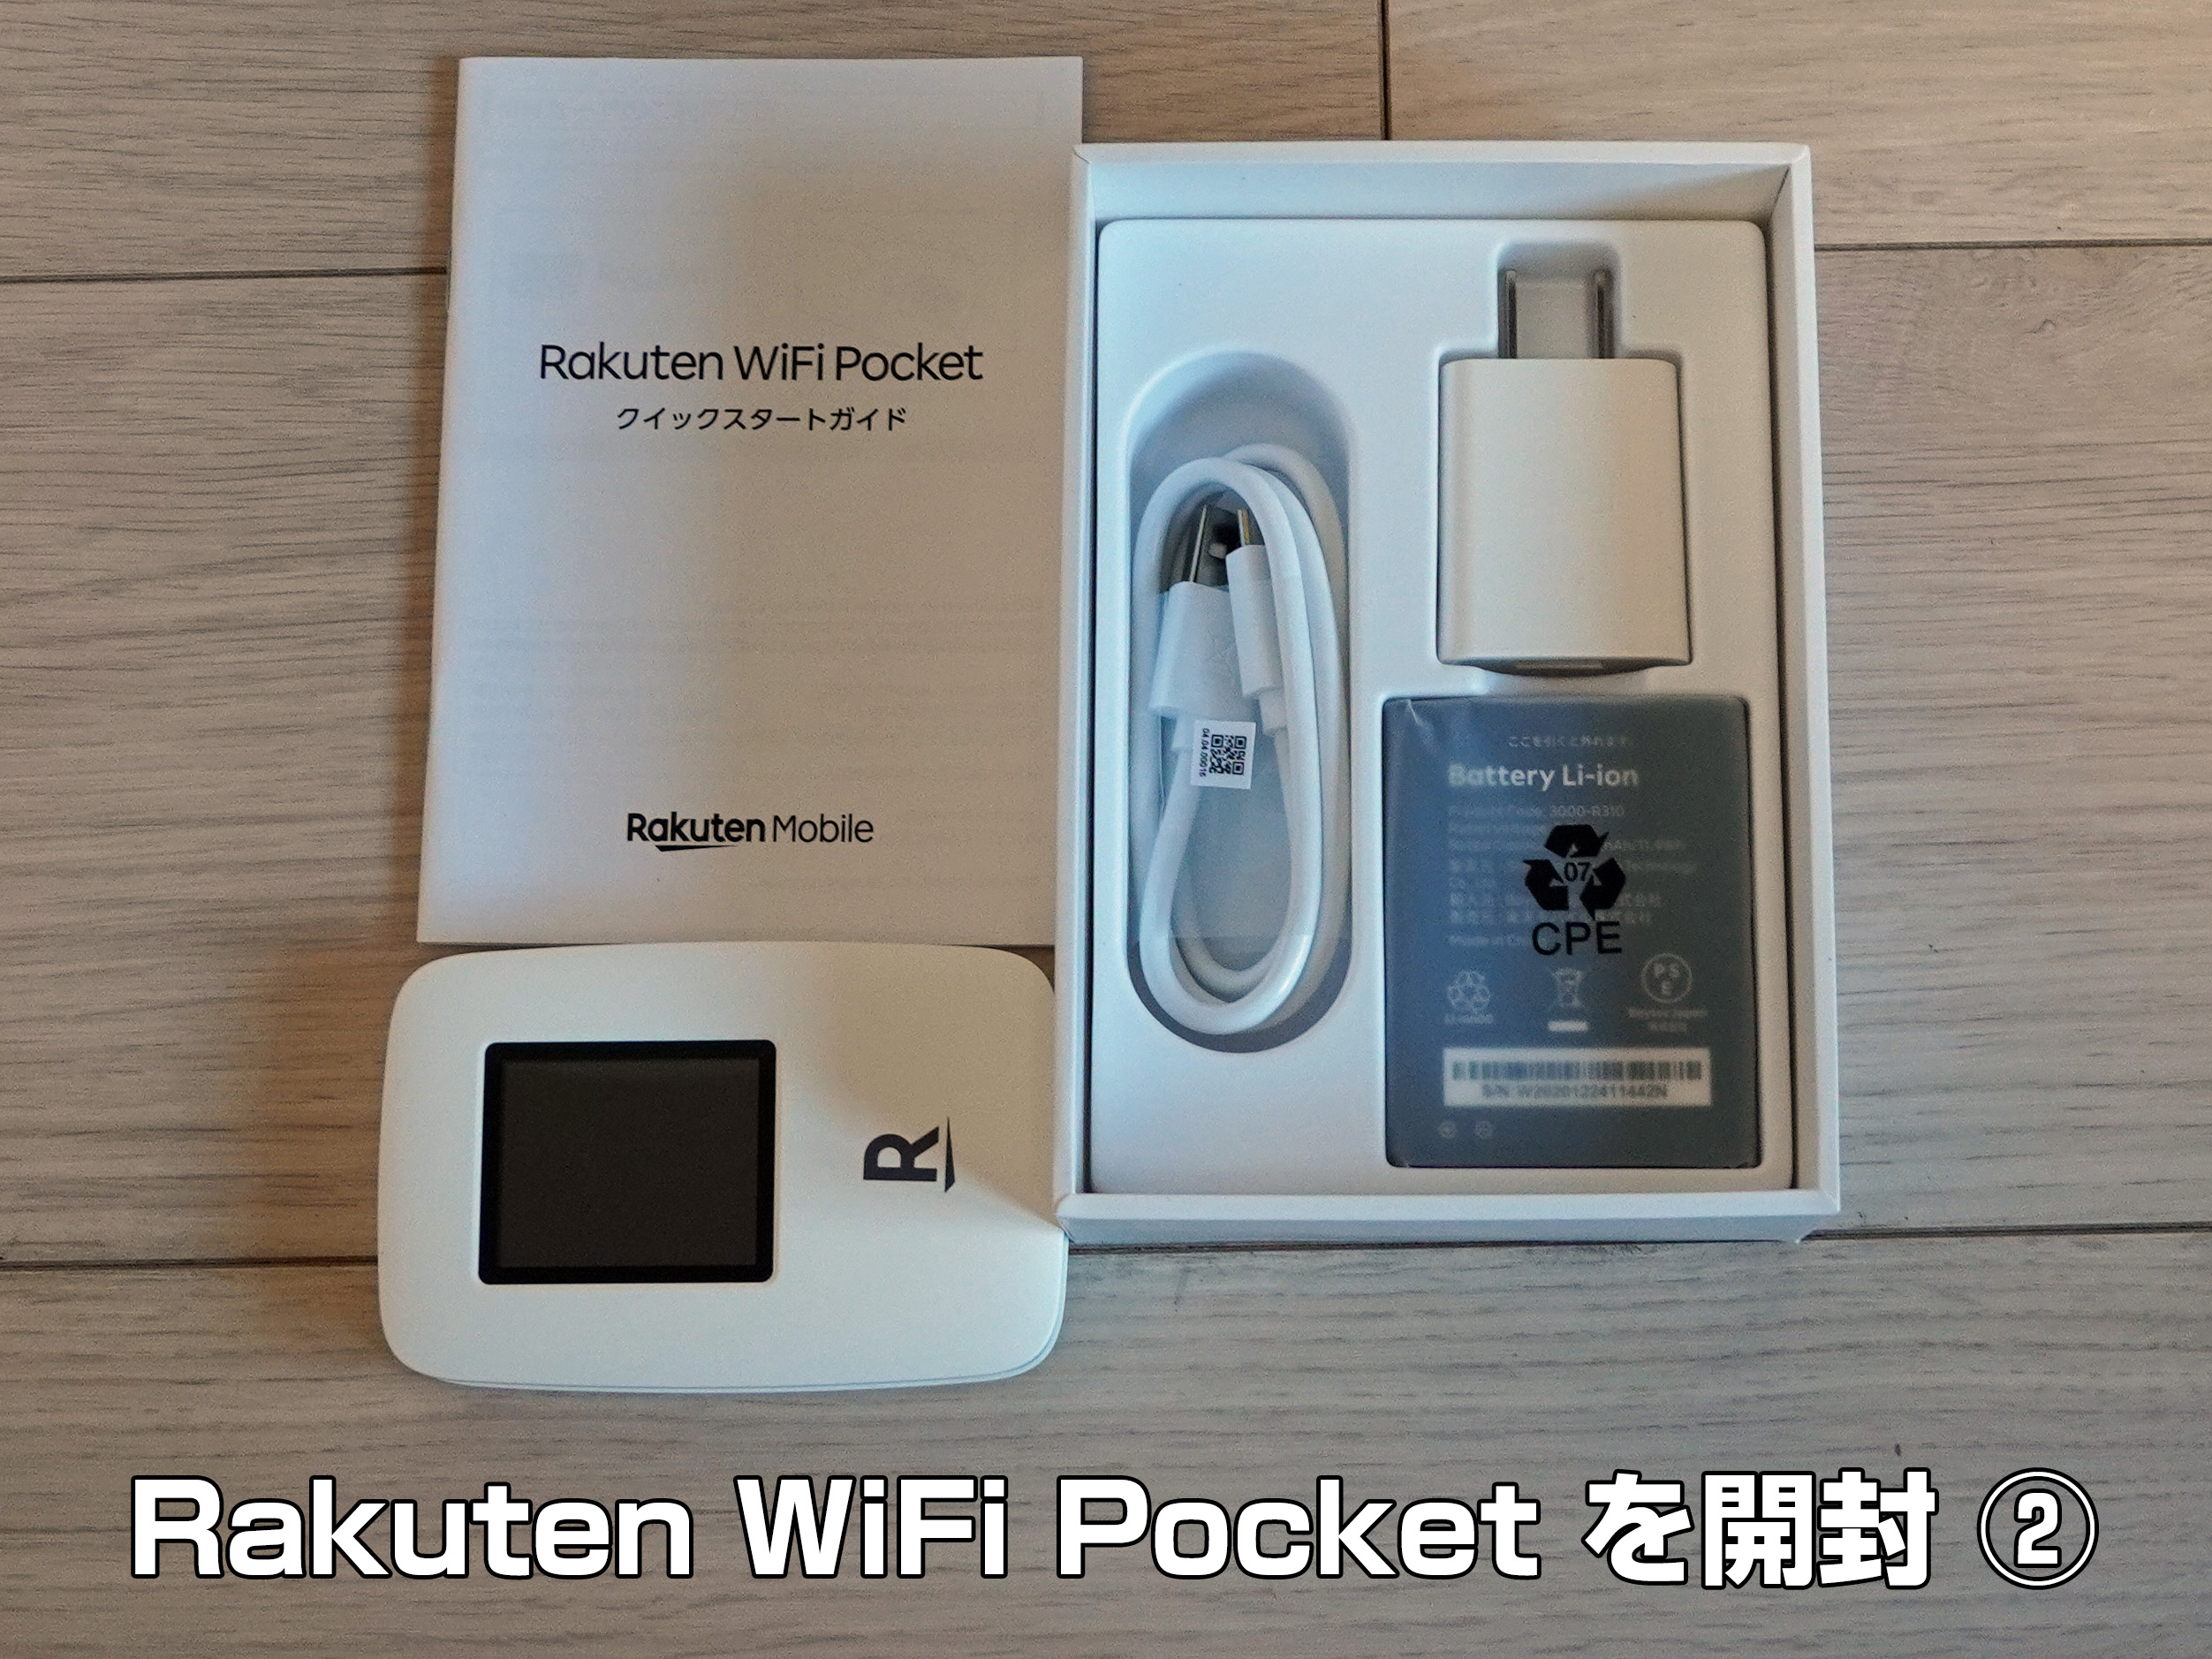 「Rakuten WiFi Pocket」 本体が入っている梱包